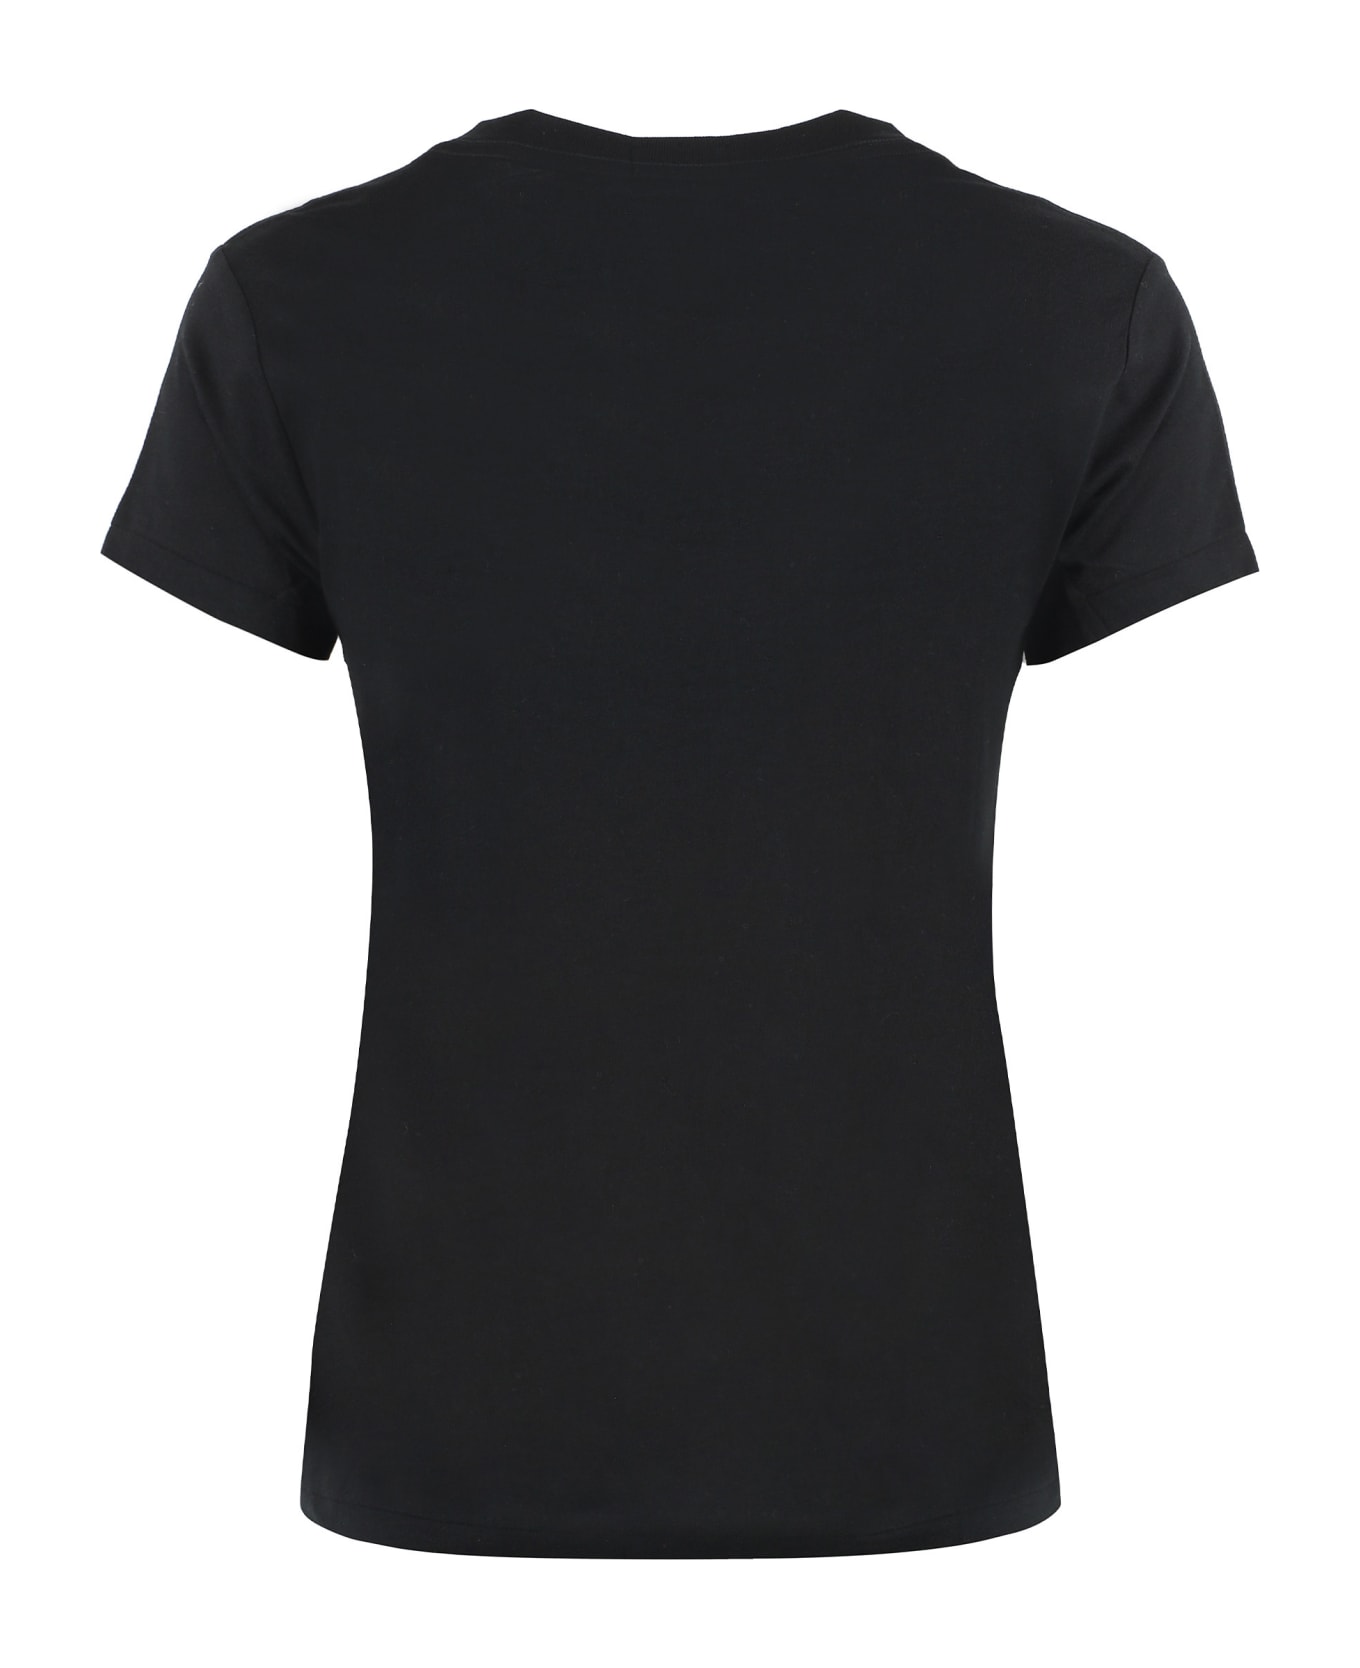 Polo Ralph Lauren Logo Cotton T-shirt - black